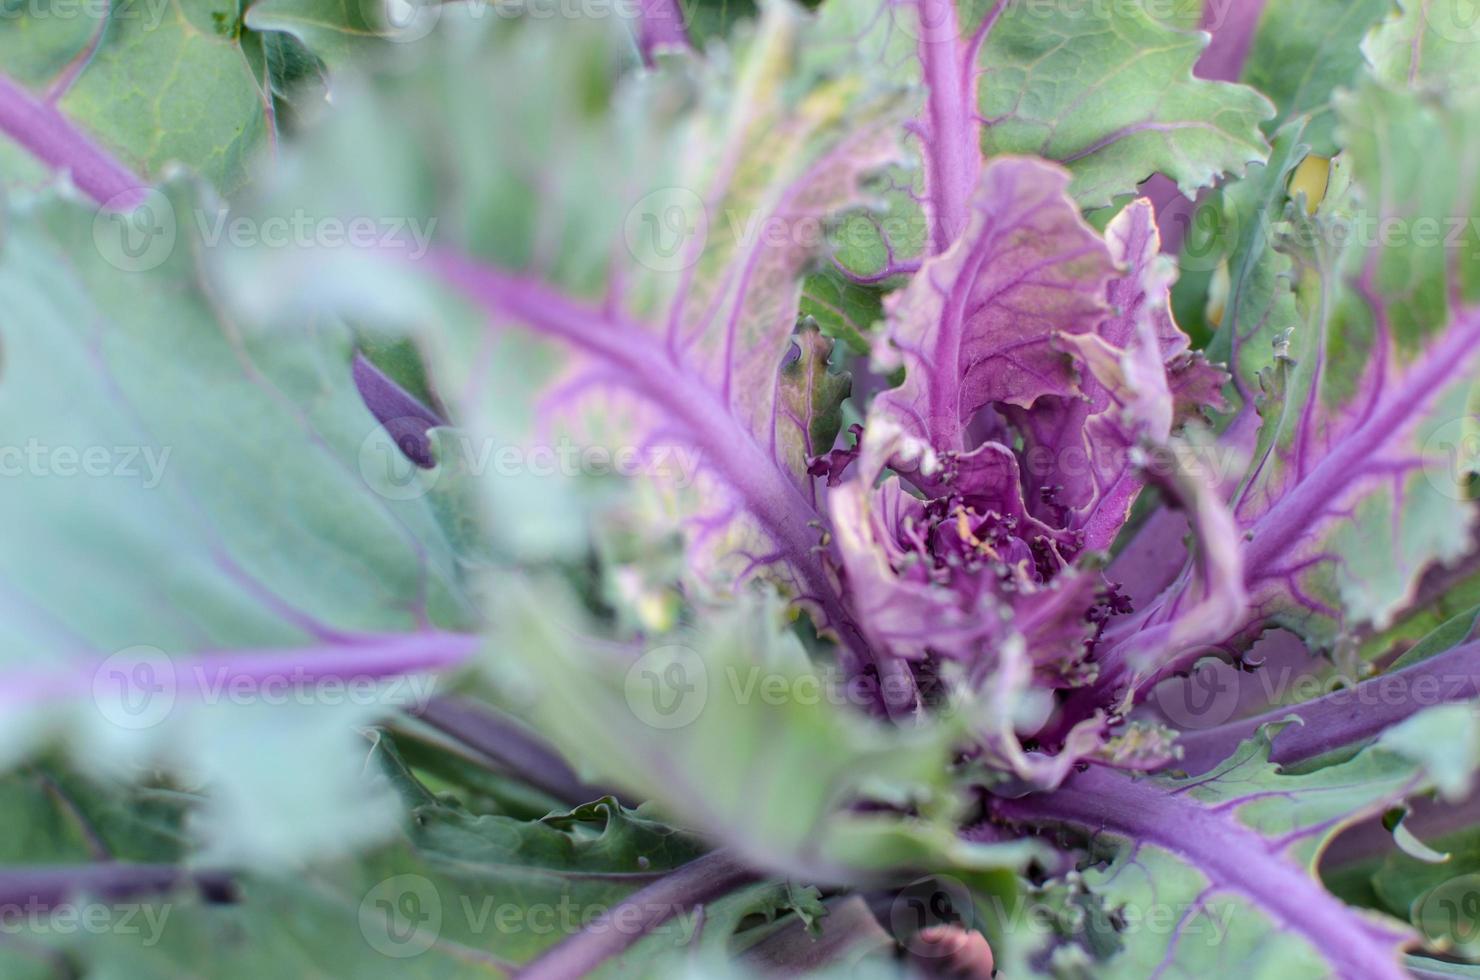 groene en paarse kool of viooltjeskool groenteplant foto